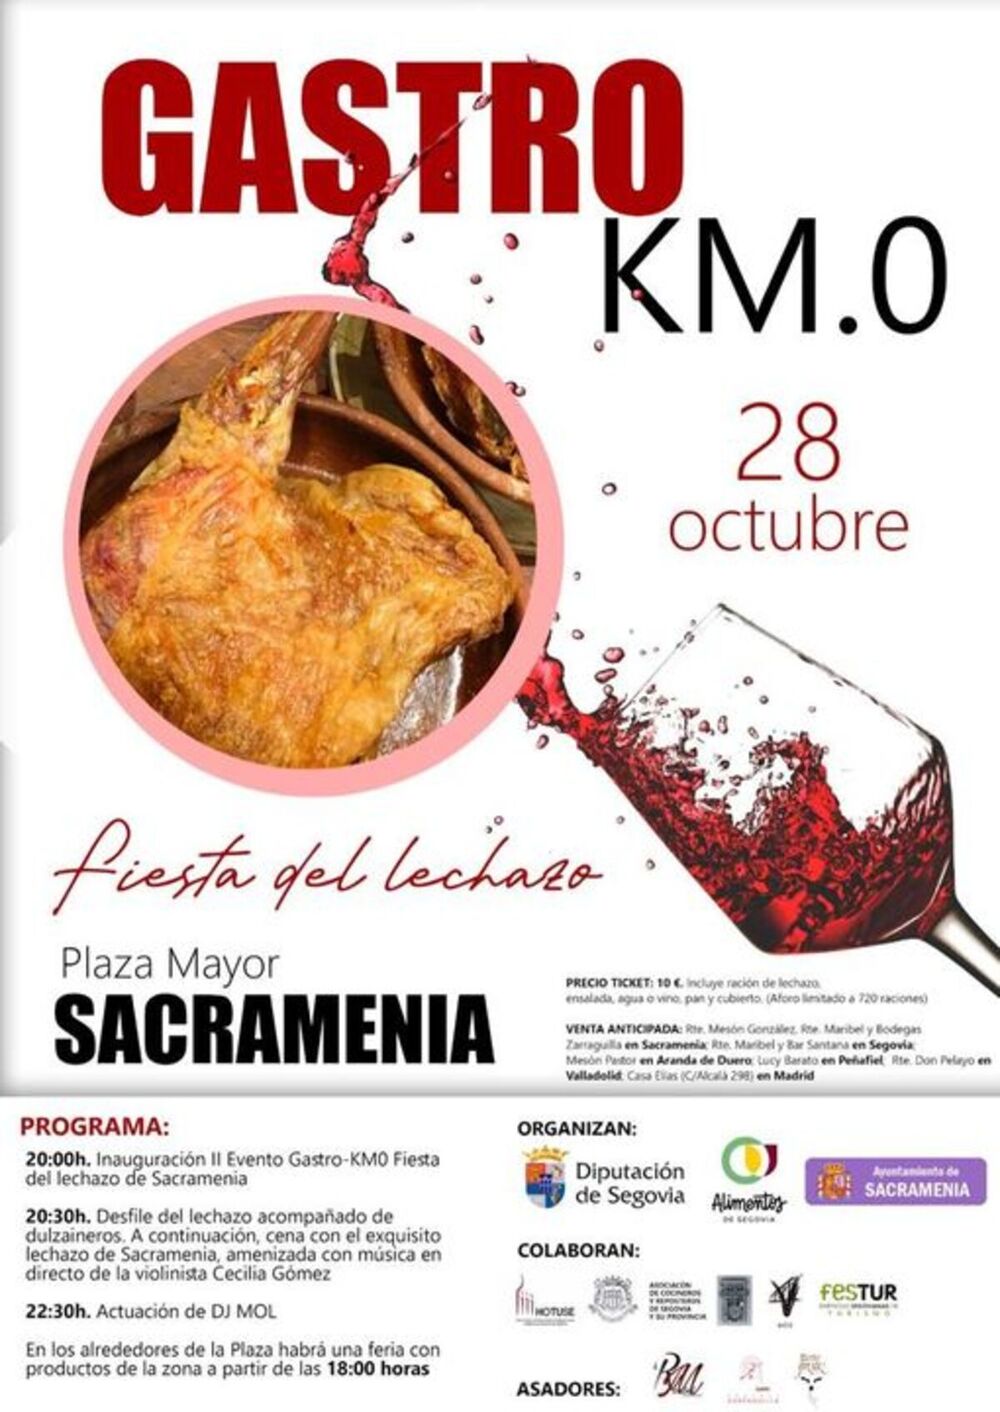 Sacramenia acoge el 28 de octubre la fiesta del lechazo 